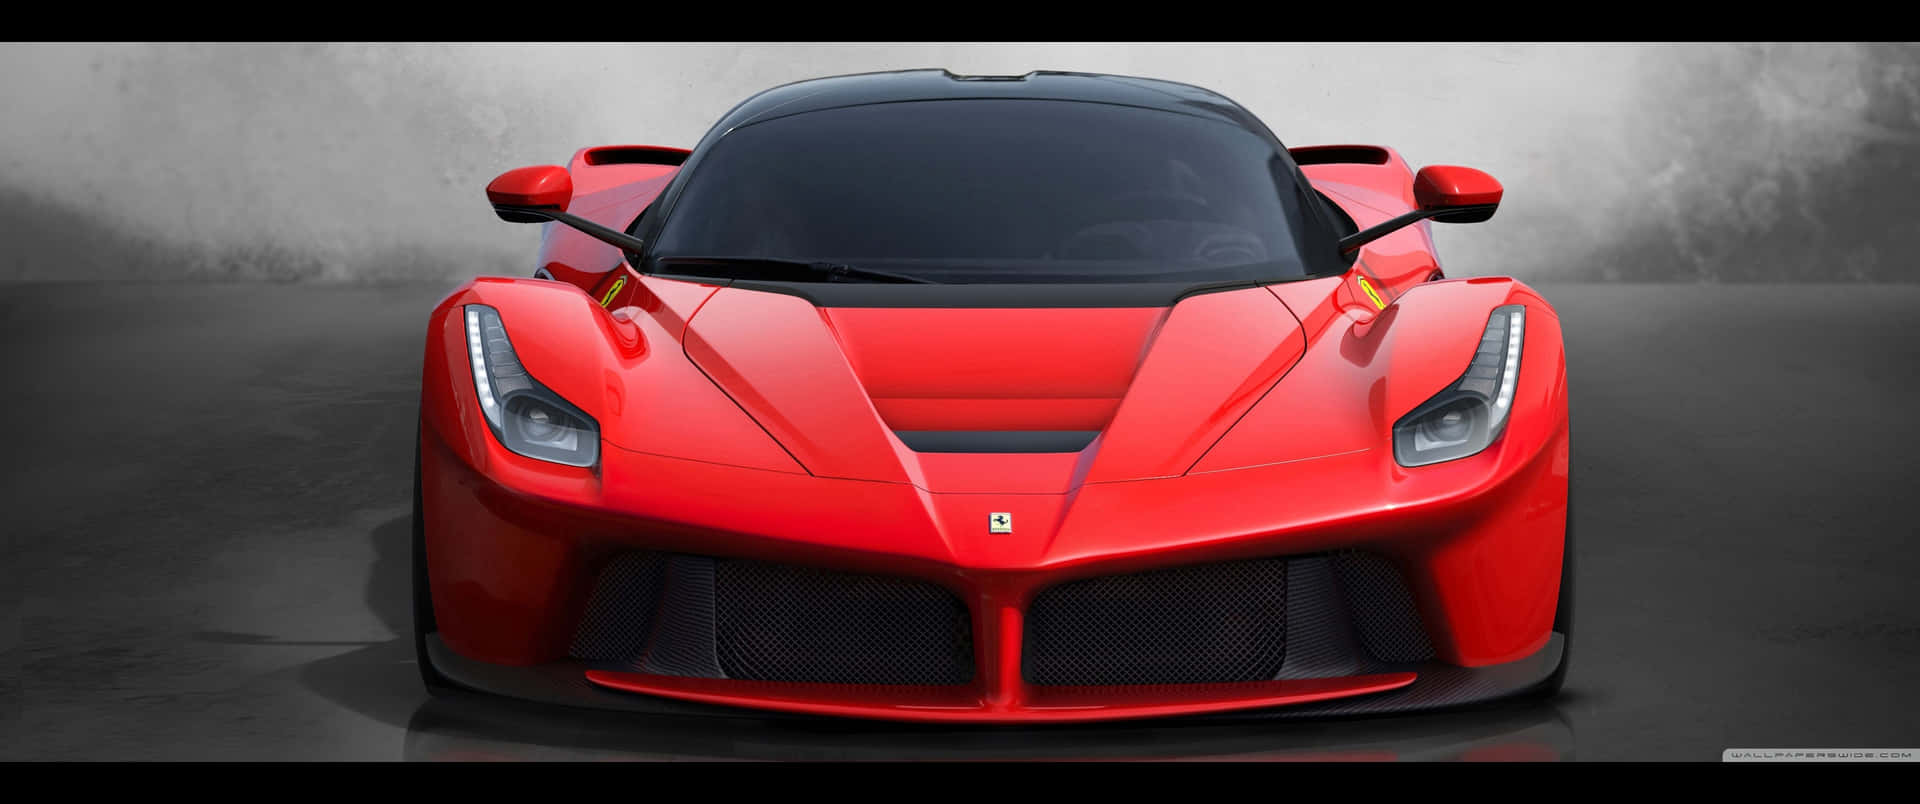 Unamirada Impresionante Al Lujoso Deportivo De Ferrari